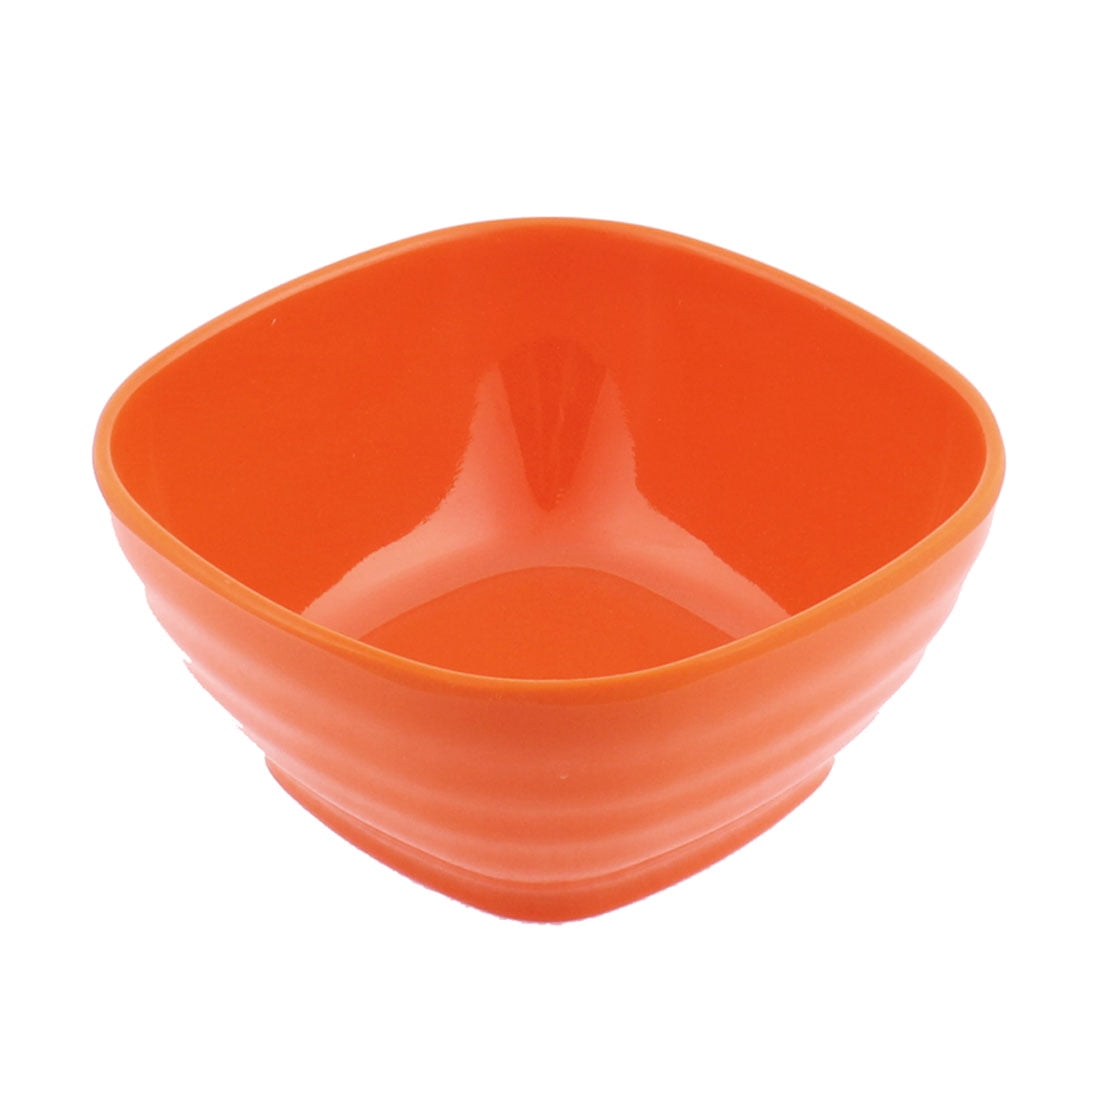 Large Plastic Bowls Cereal Soup Platos De Plastico Para Cereal Ensalada Picnic